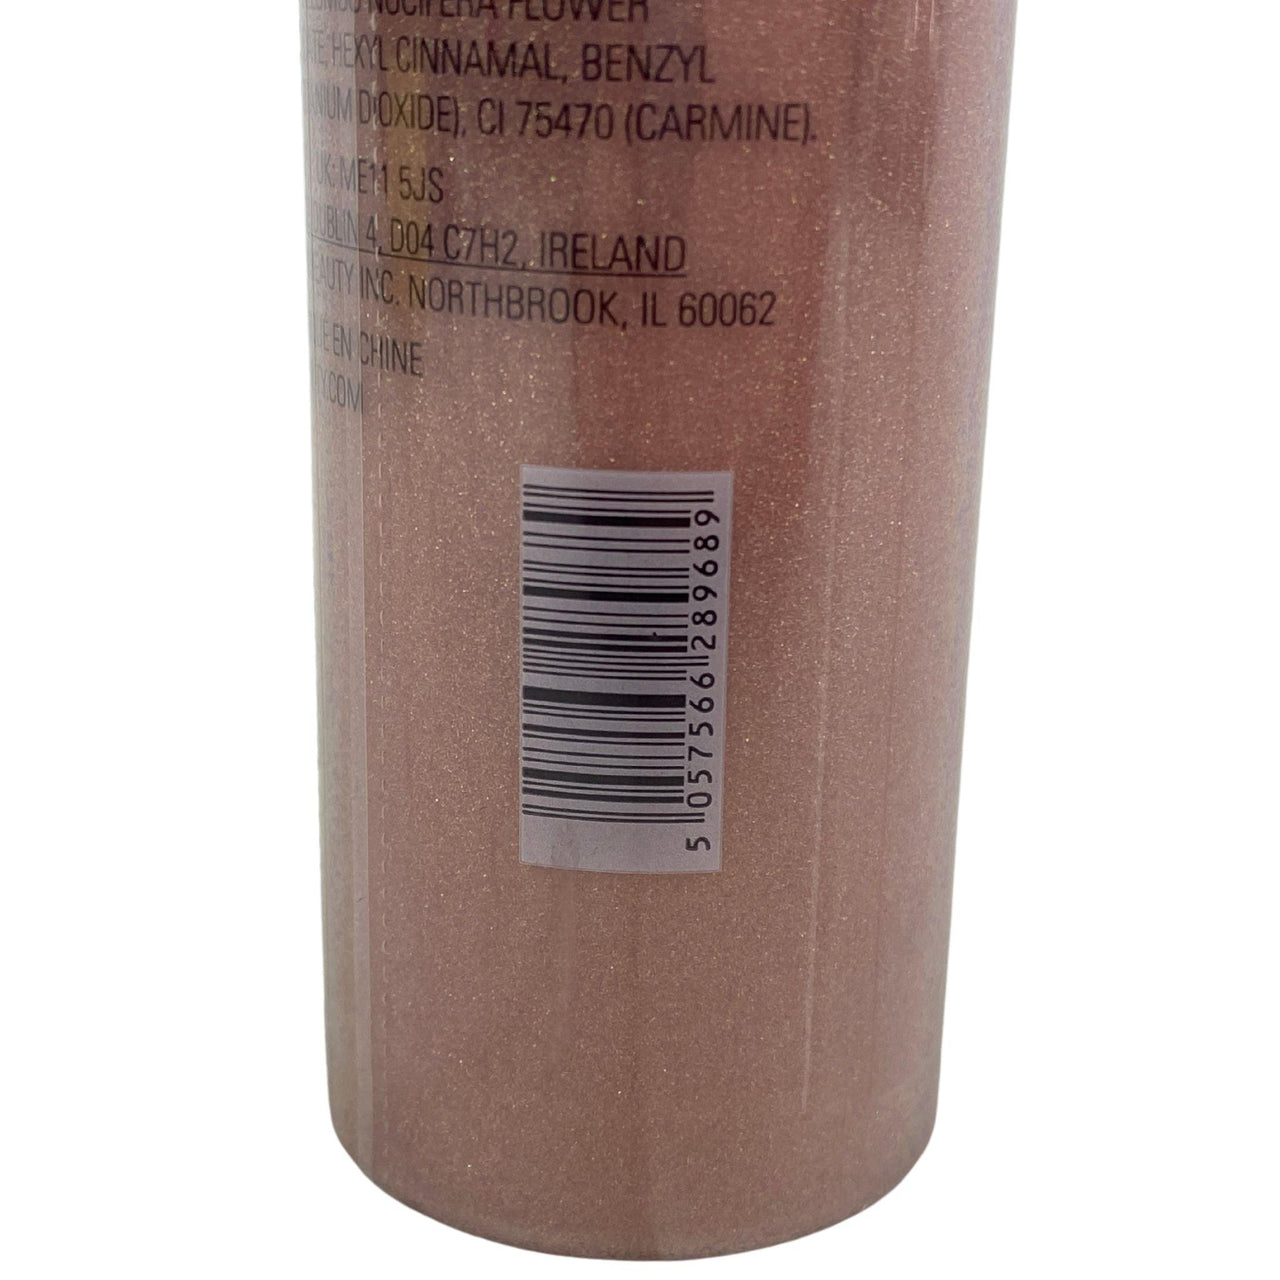 Makeup Obsession London Shy Blush Shimmer Glow Body Oil 3.38OZ (36 Pcs Lot) - Discount Wholesalers Inc